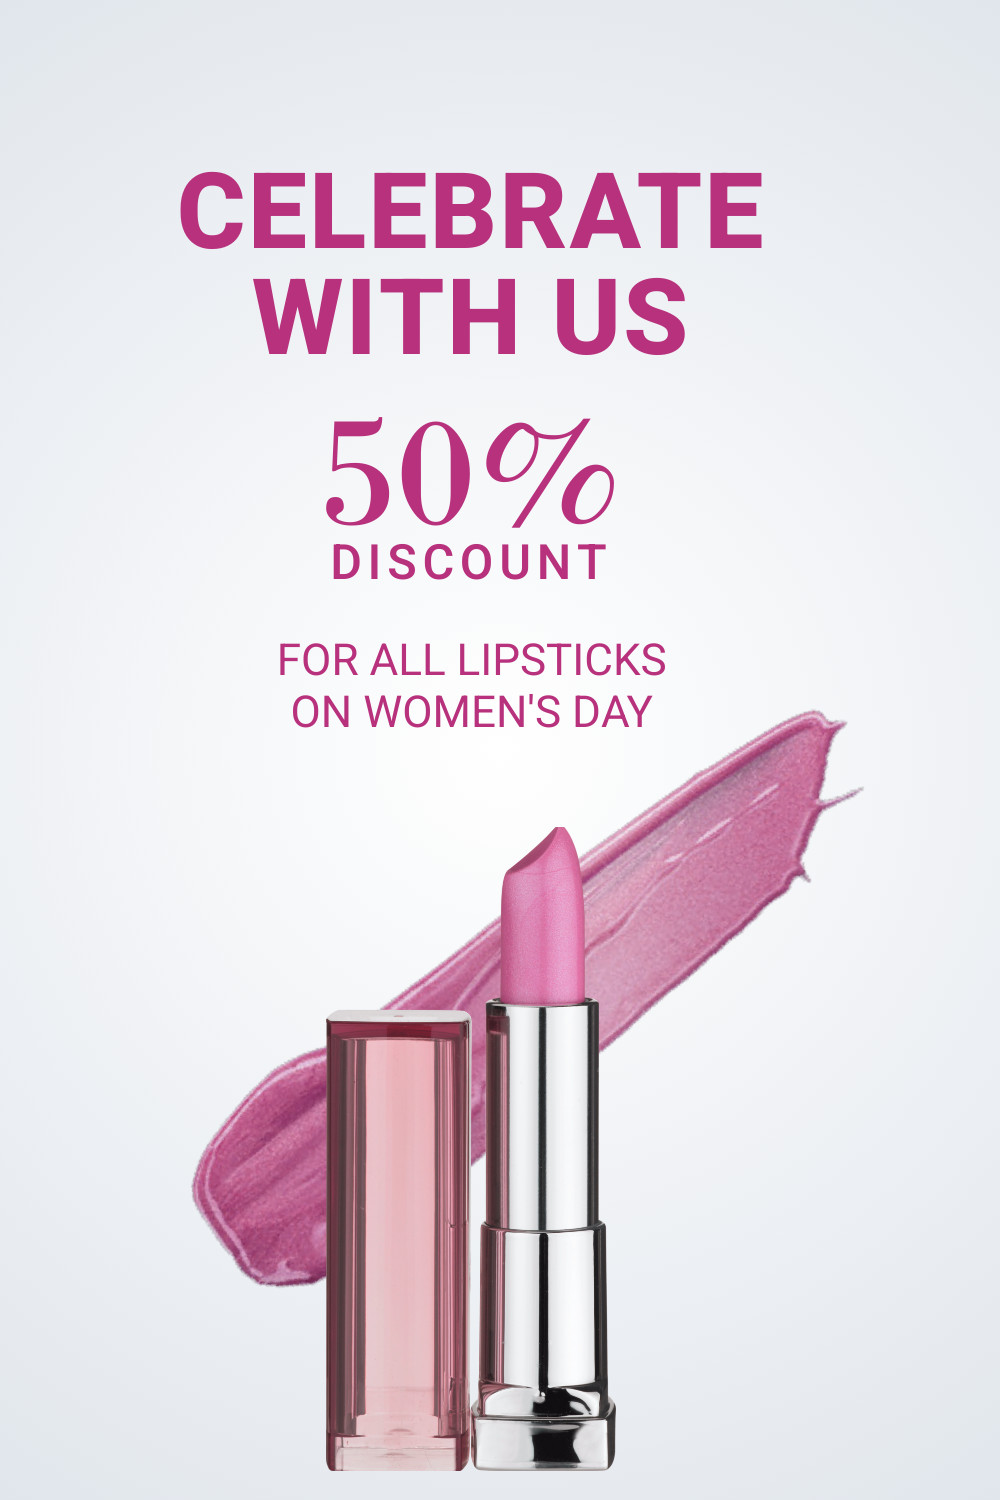 Celebrate Women's Day Lipstick Inline Rectangle 300x250